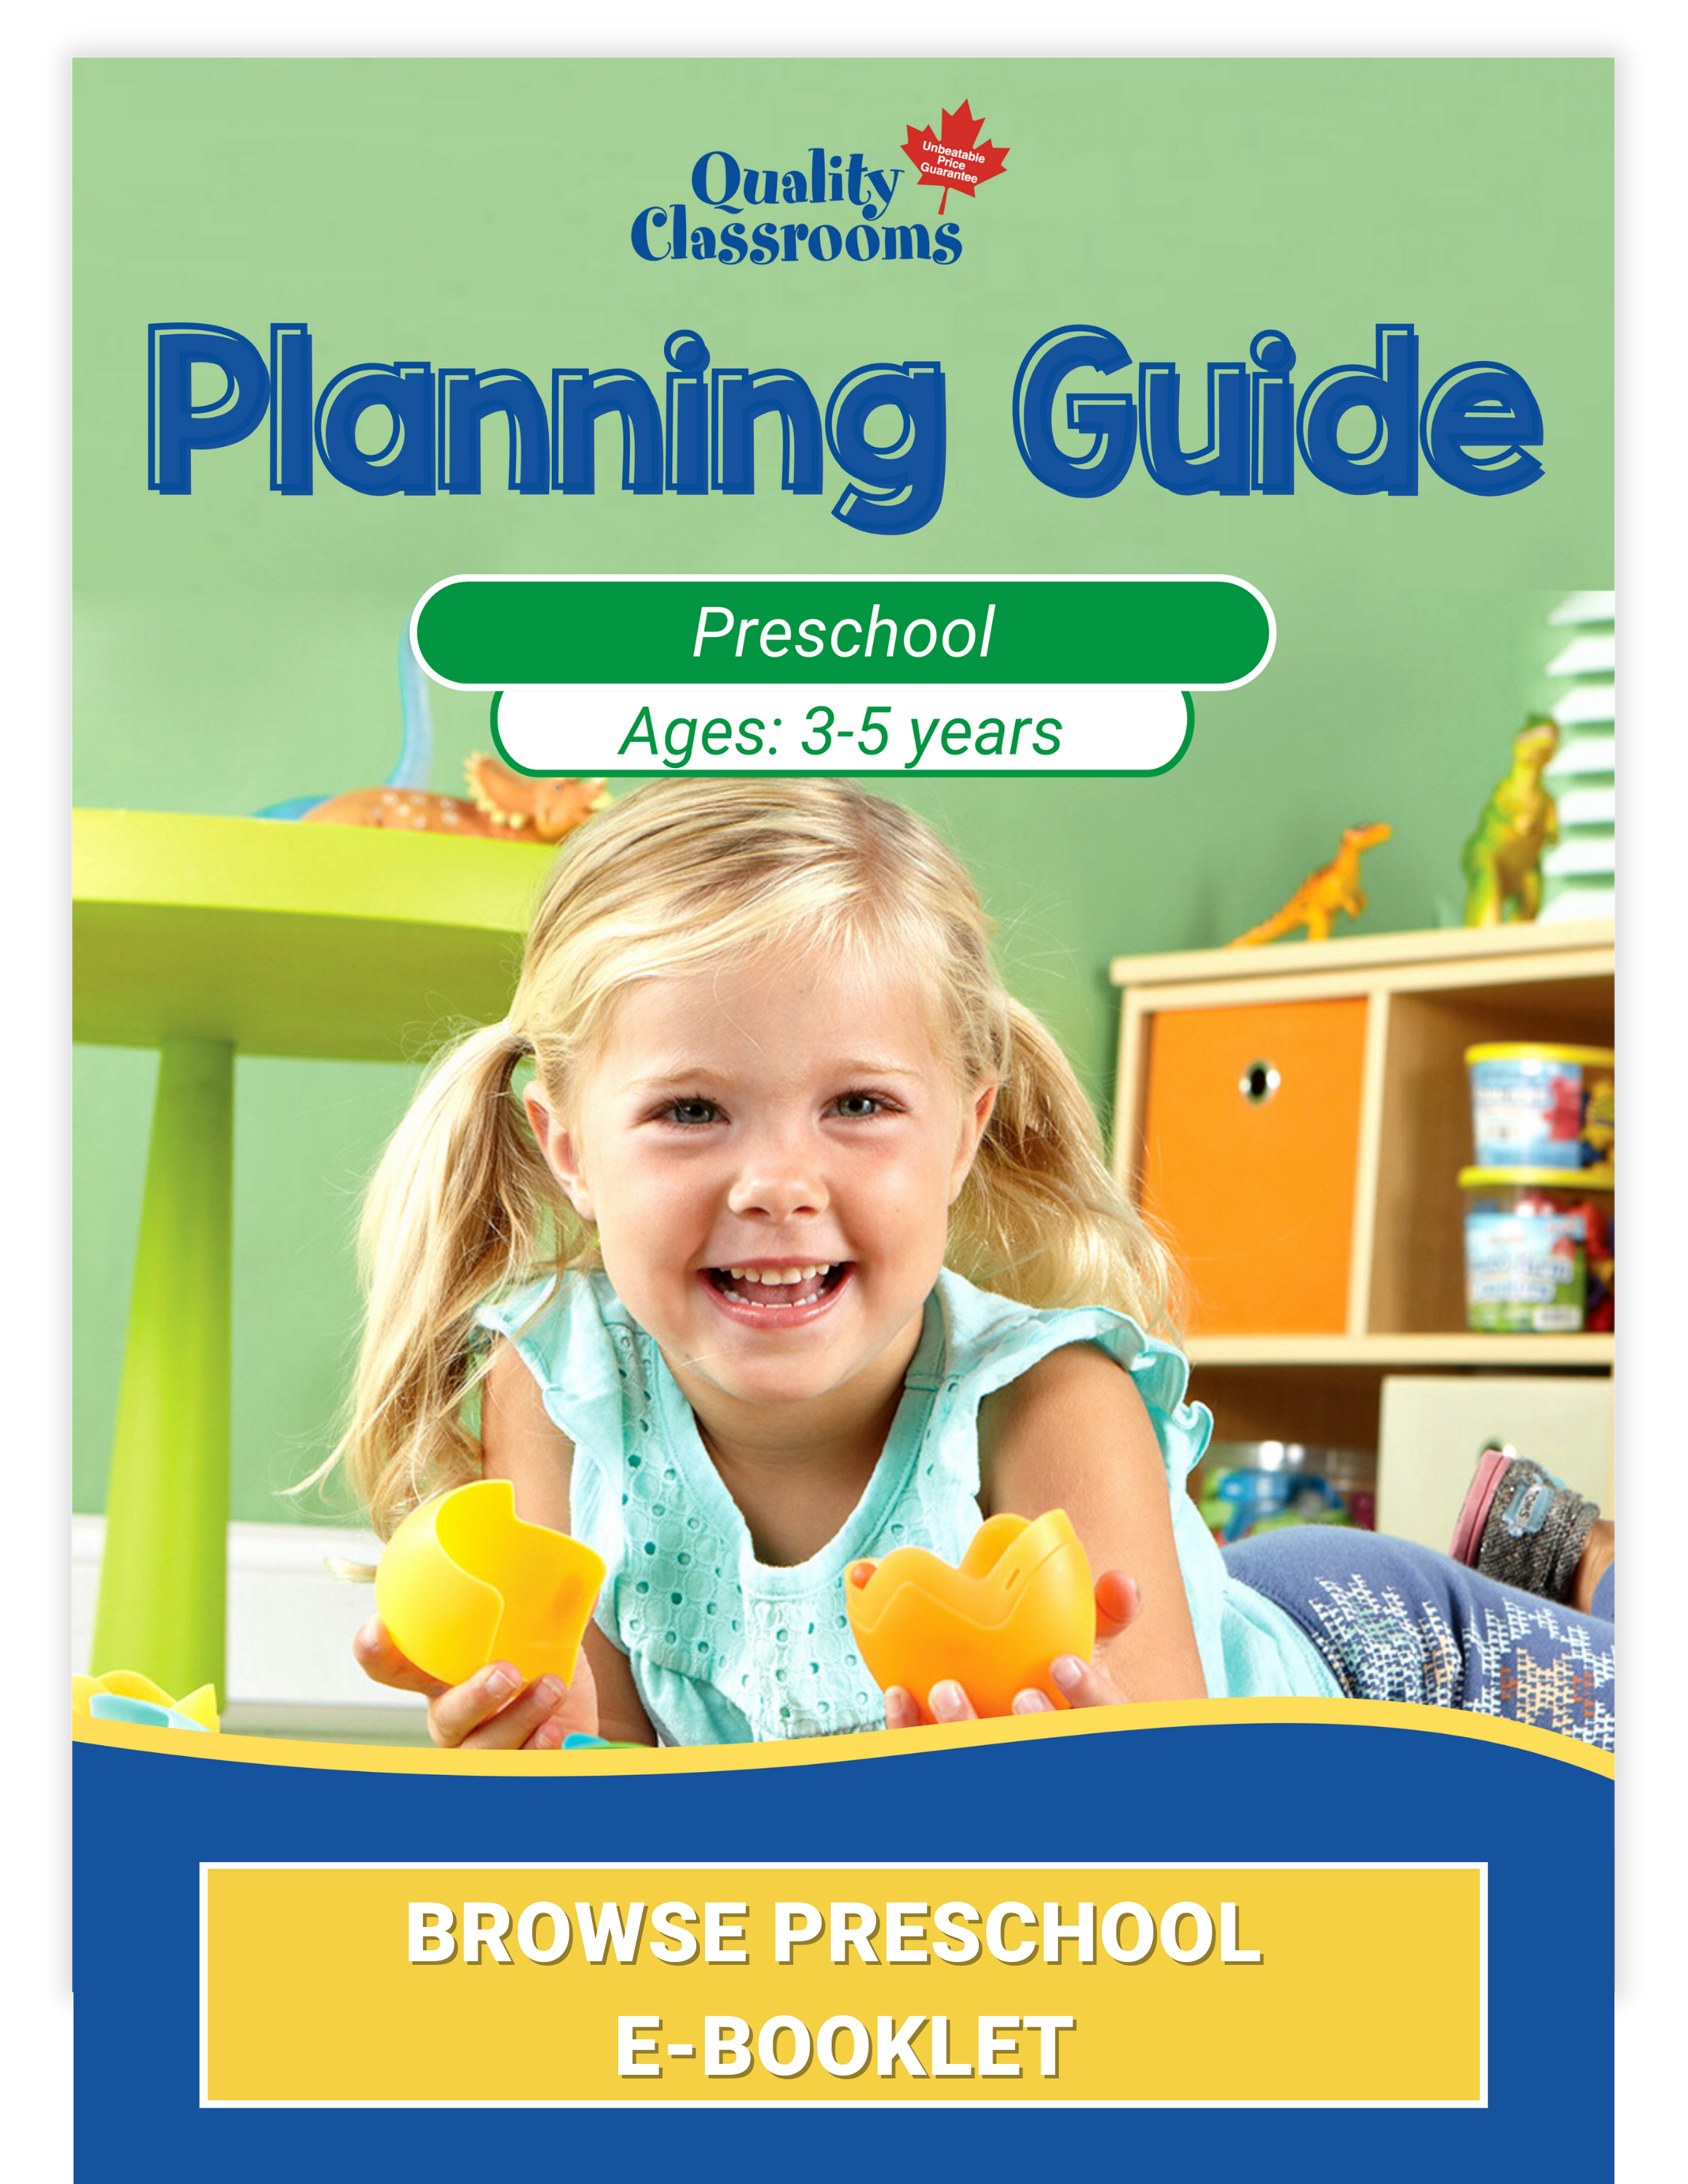 View Preschool e-booklet